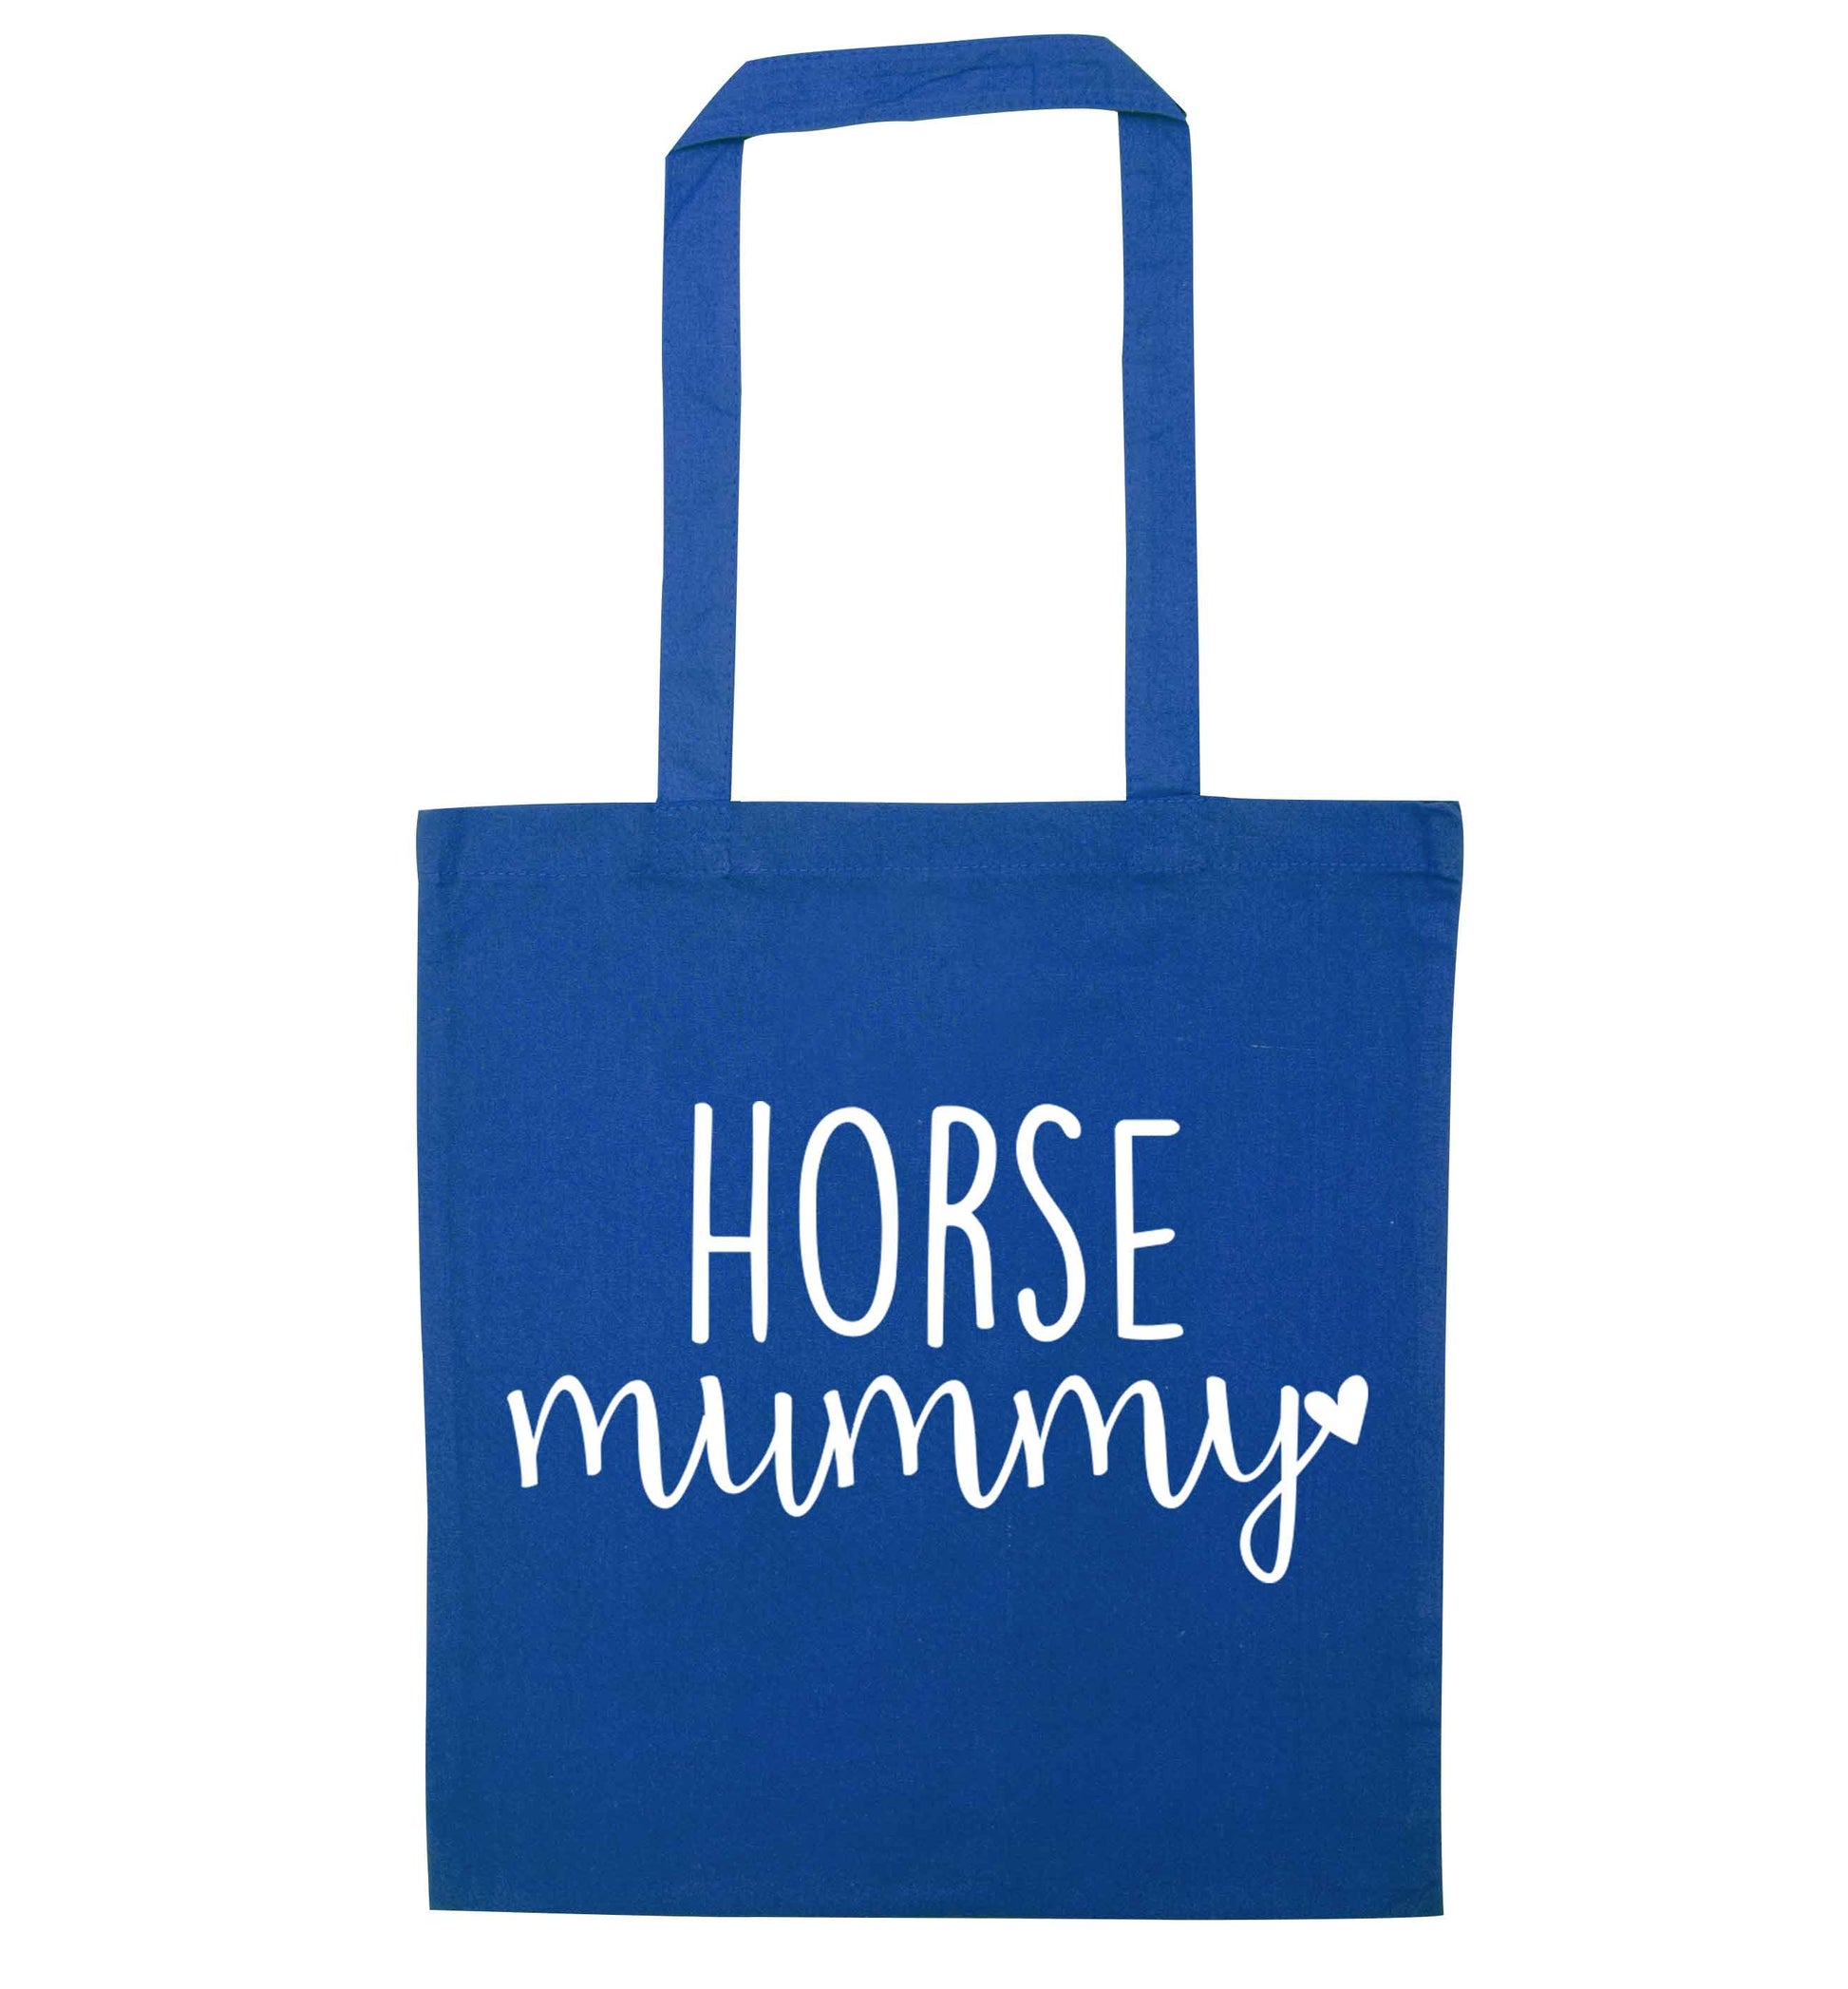 Horse mummy blue tote bag